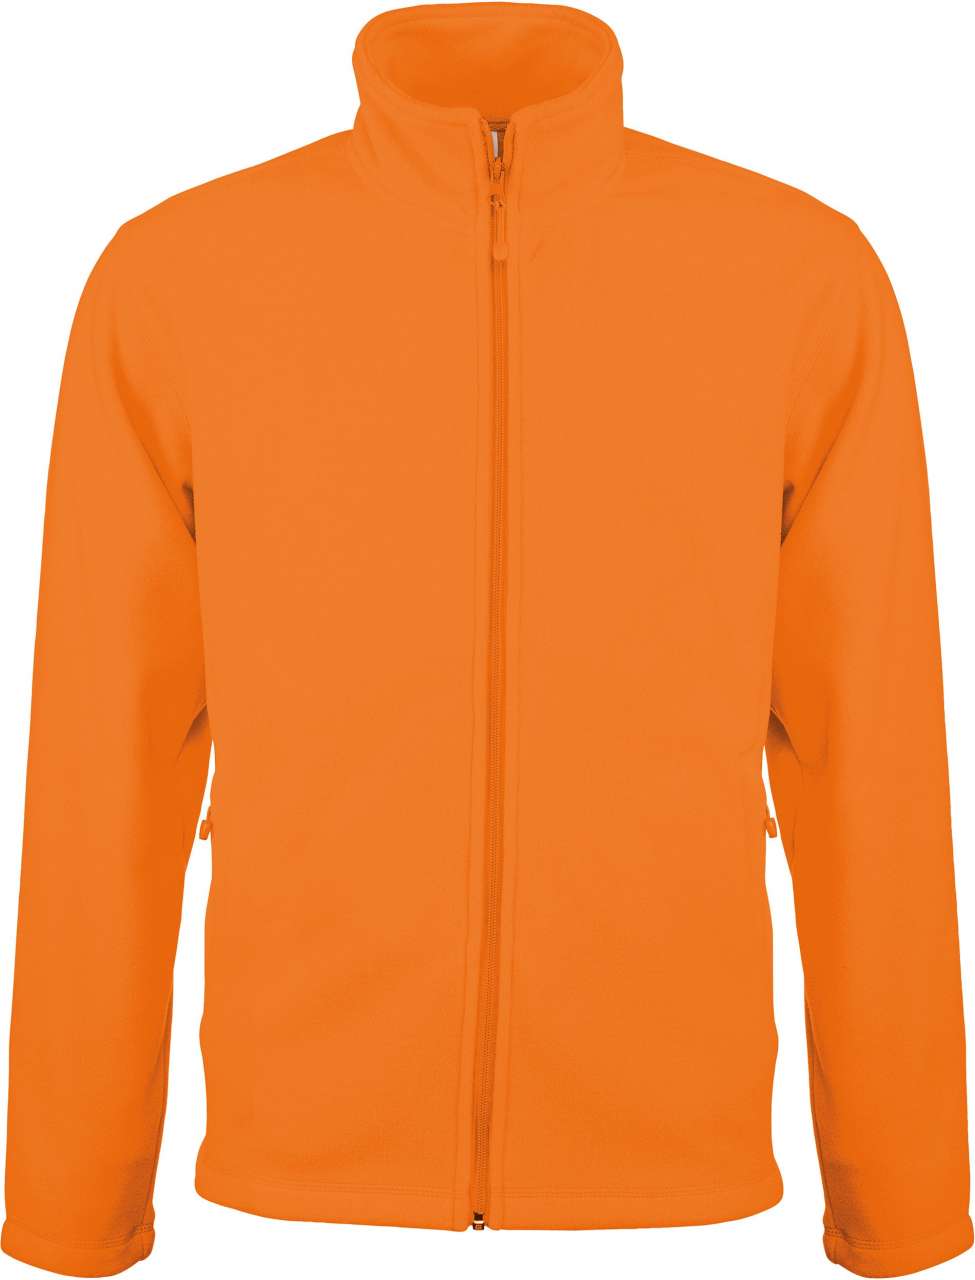 Hanorac orange barbatesc Falco 100% fleece anti-scamosare 300 g/mp, buzunare laterale, fermoar KA911